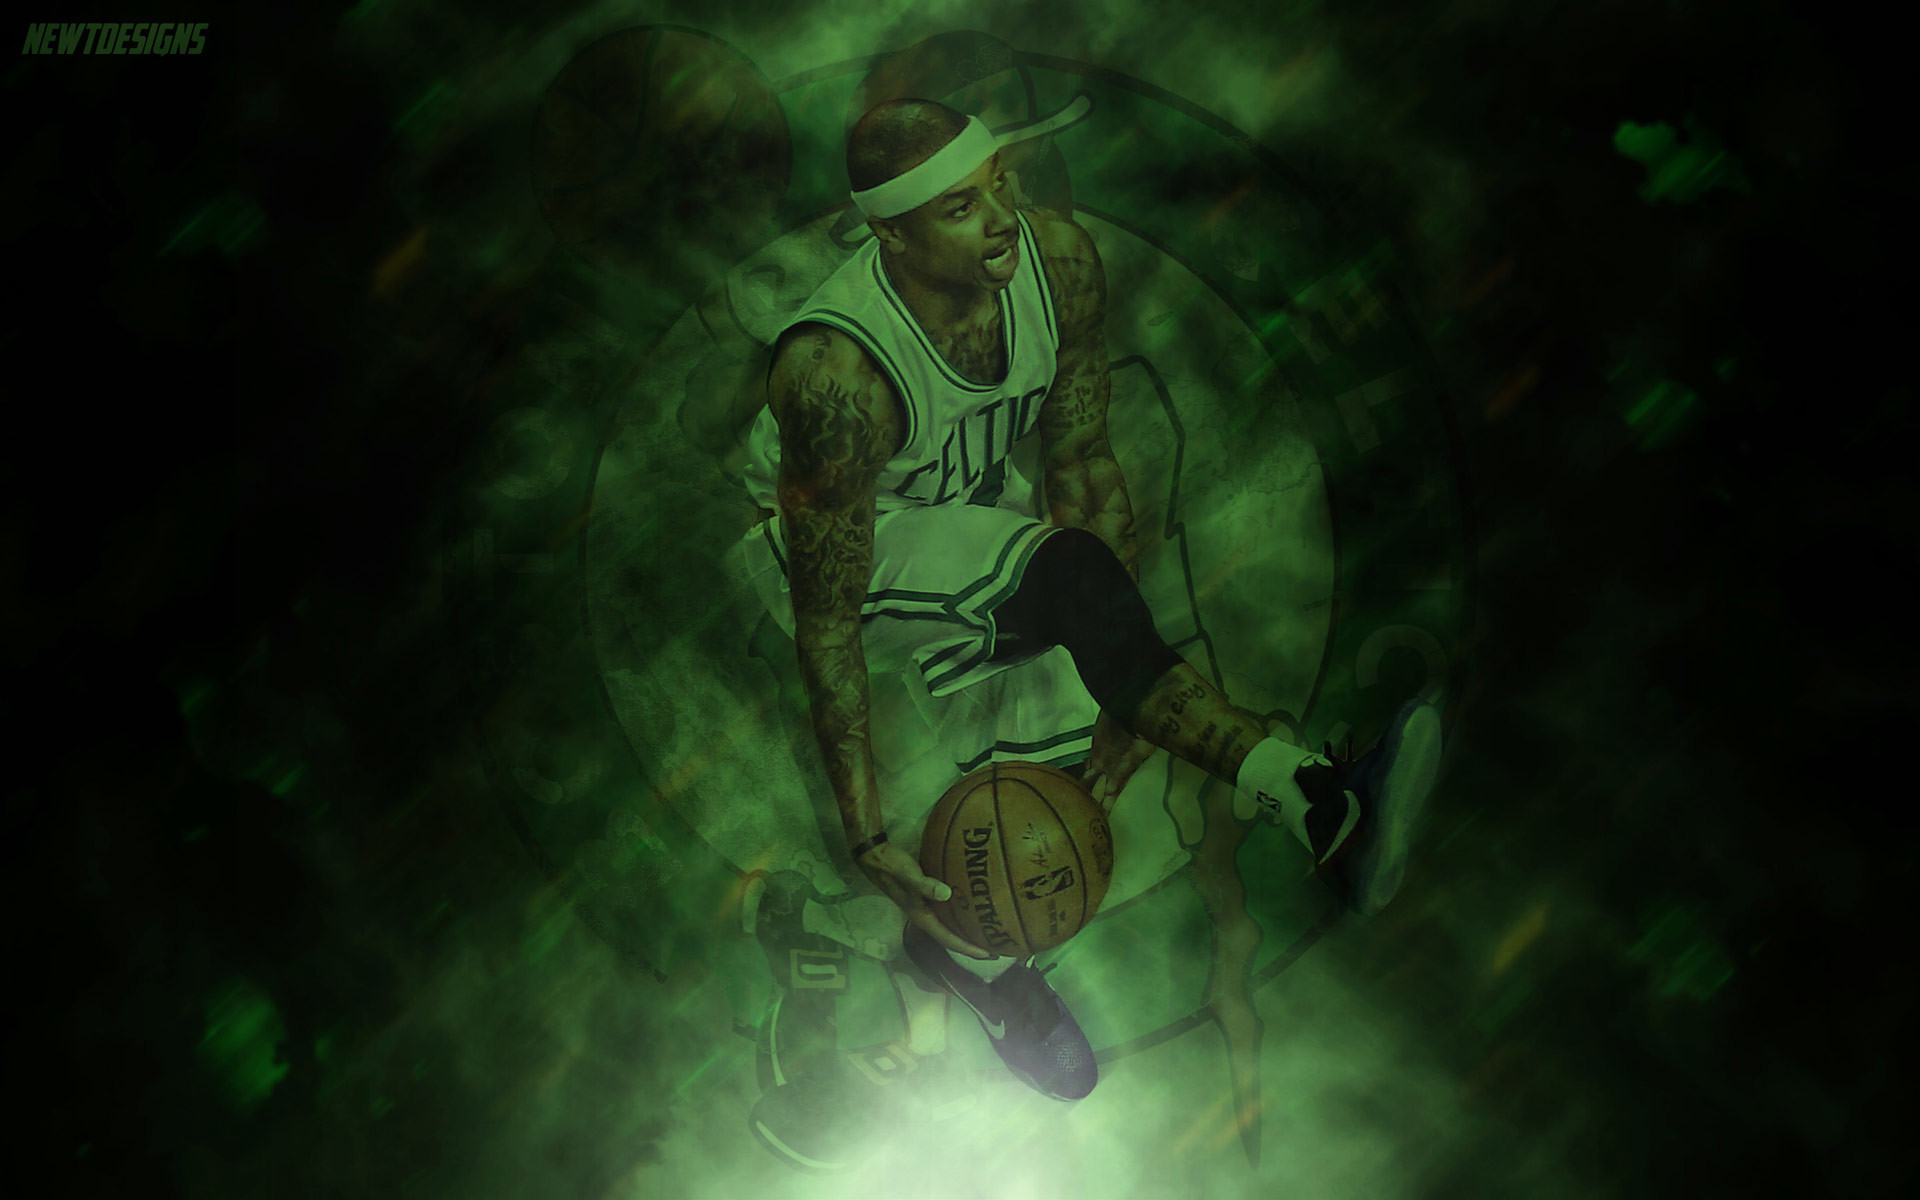 Boston Celtics iPhone Wallpapers  Top Free Boston Celtics iPhone  Backgrounds  WallpaperAccess